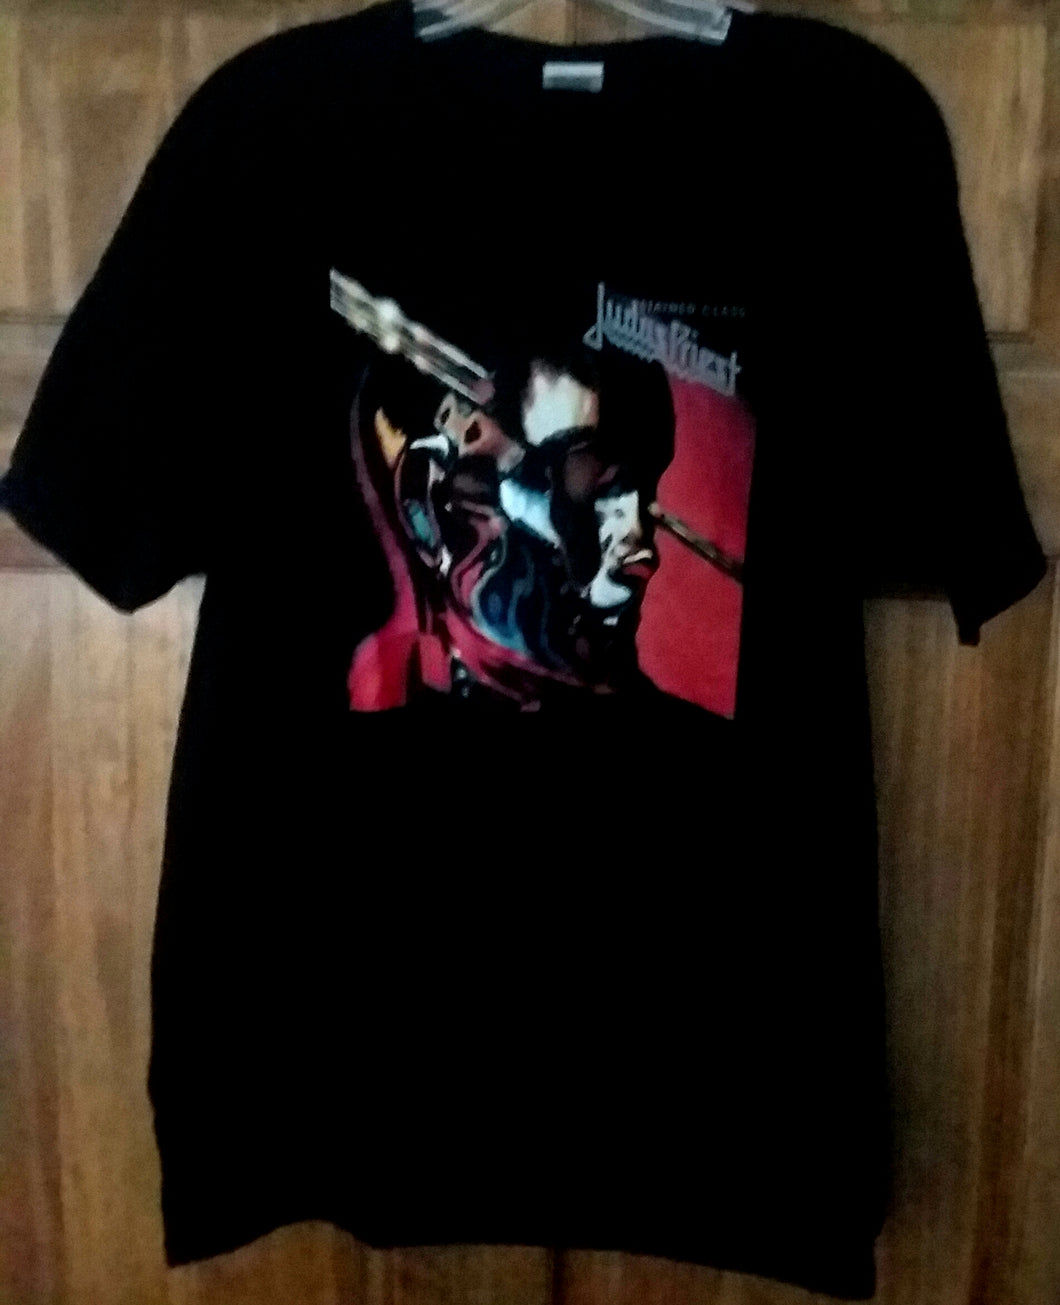 Judas Priest Stained Class Rock T-Shirt Men's Size Medium